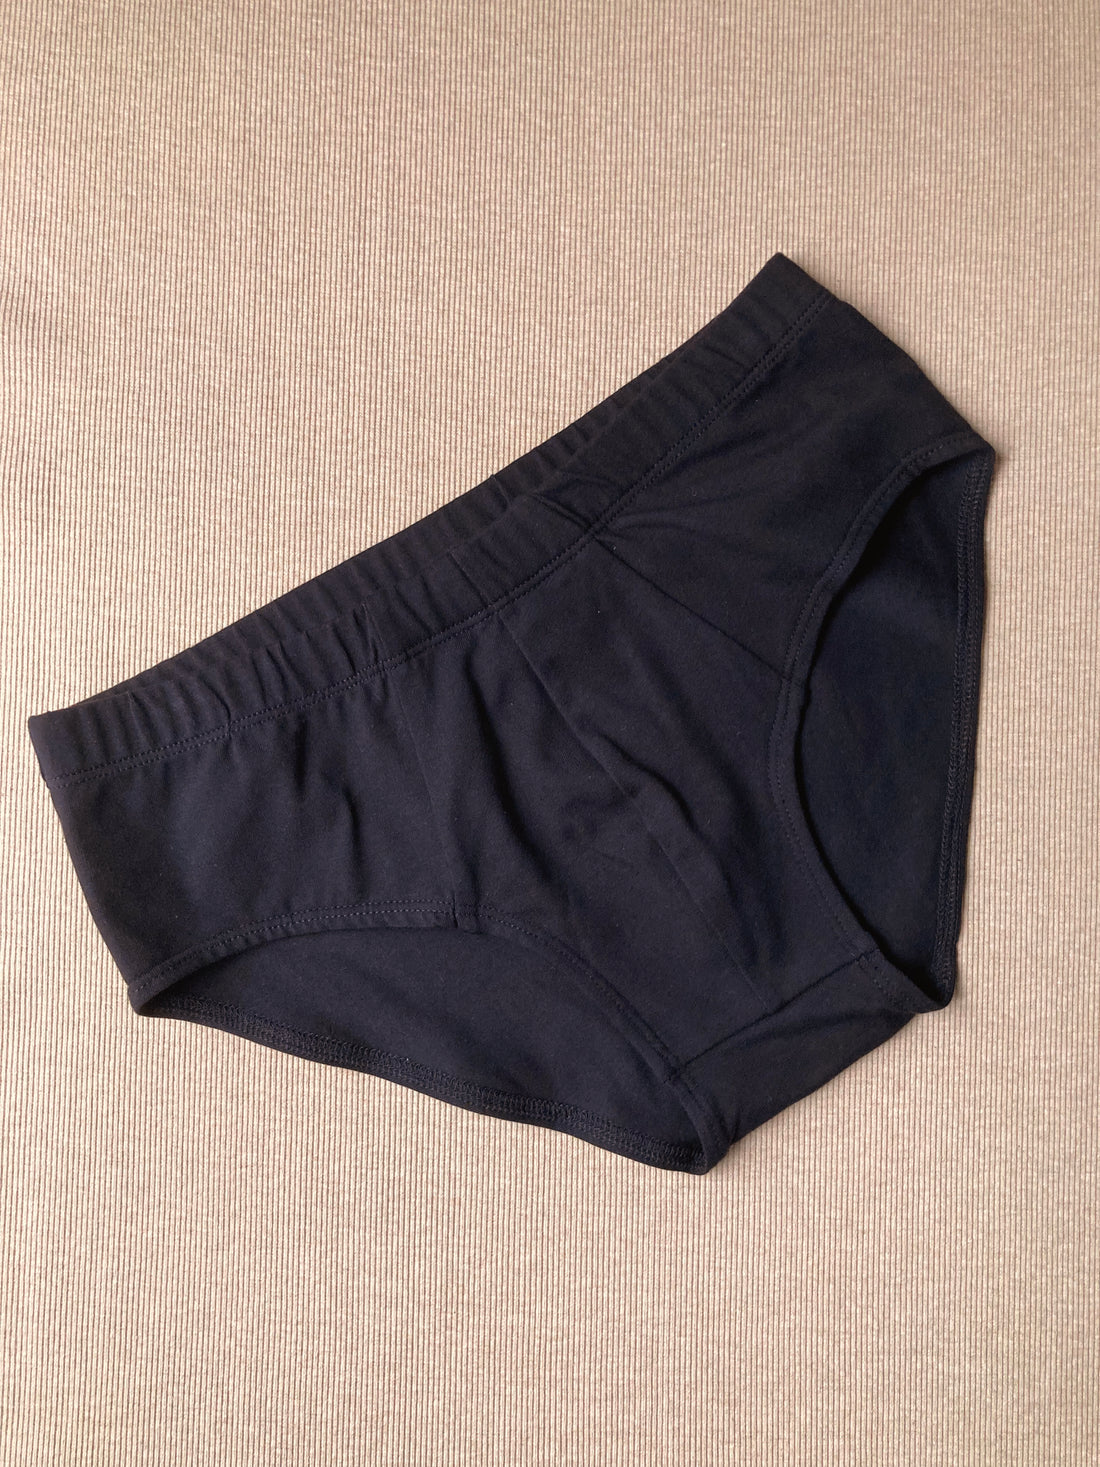 Stafford Cotton Underwear for Men for sale